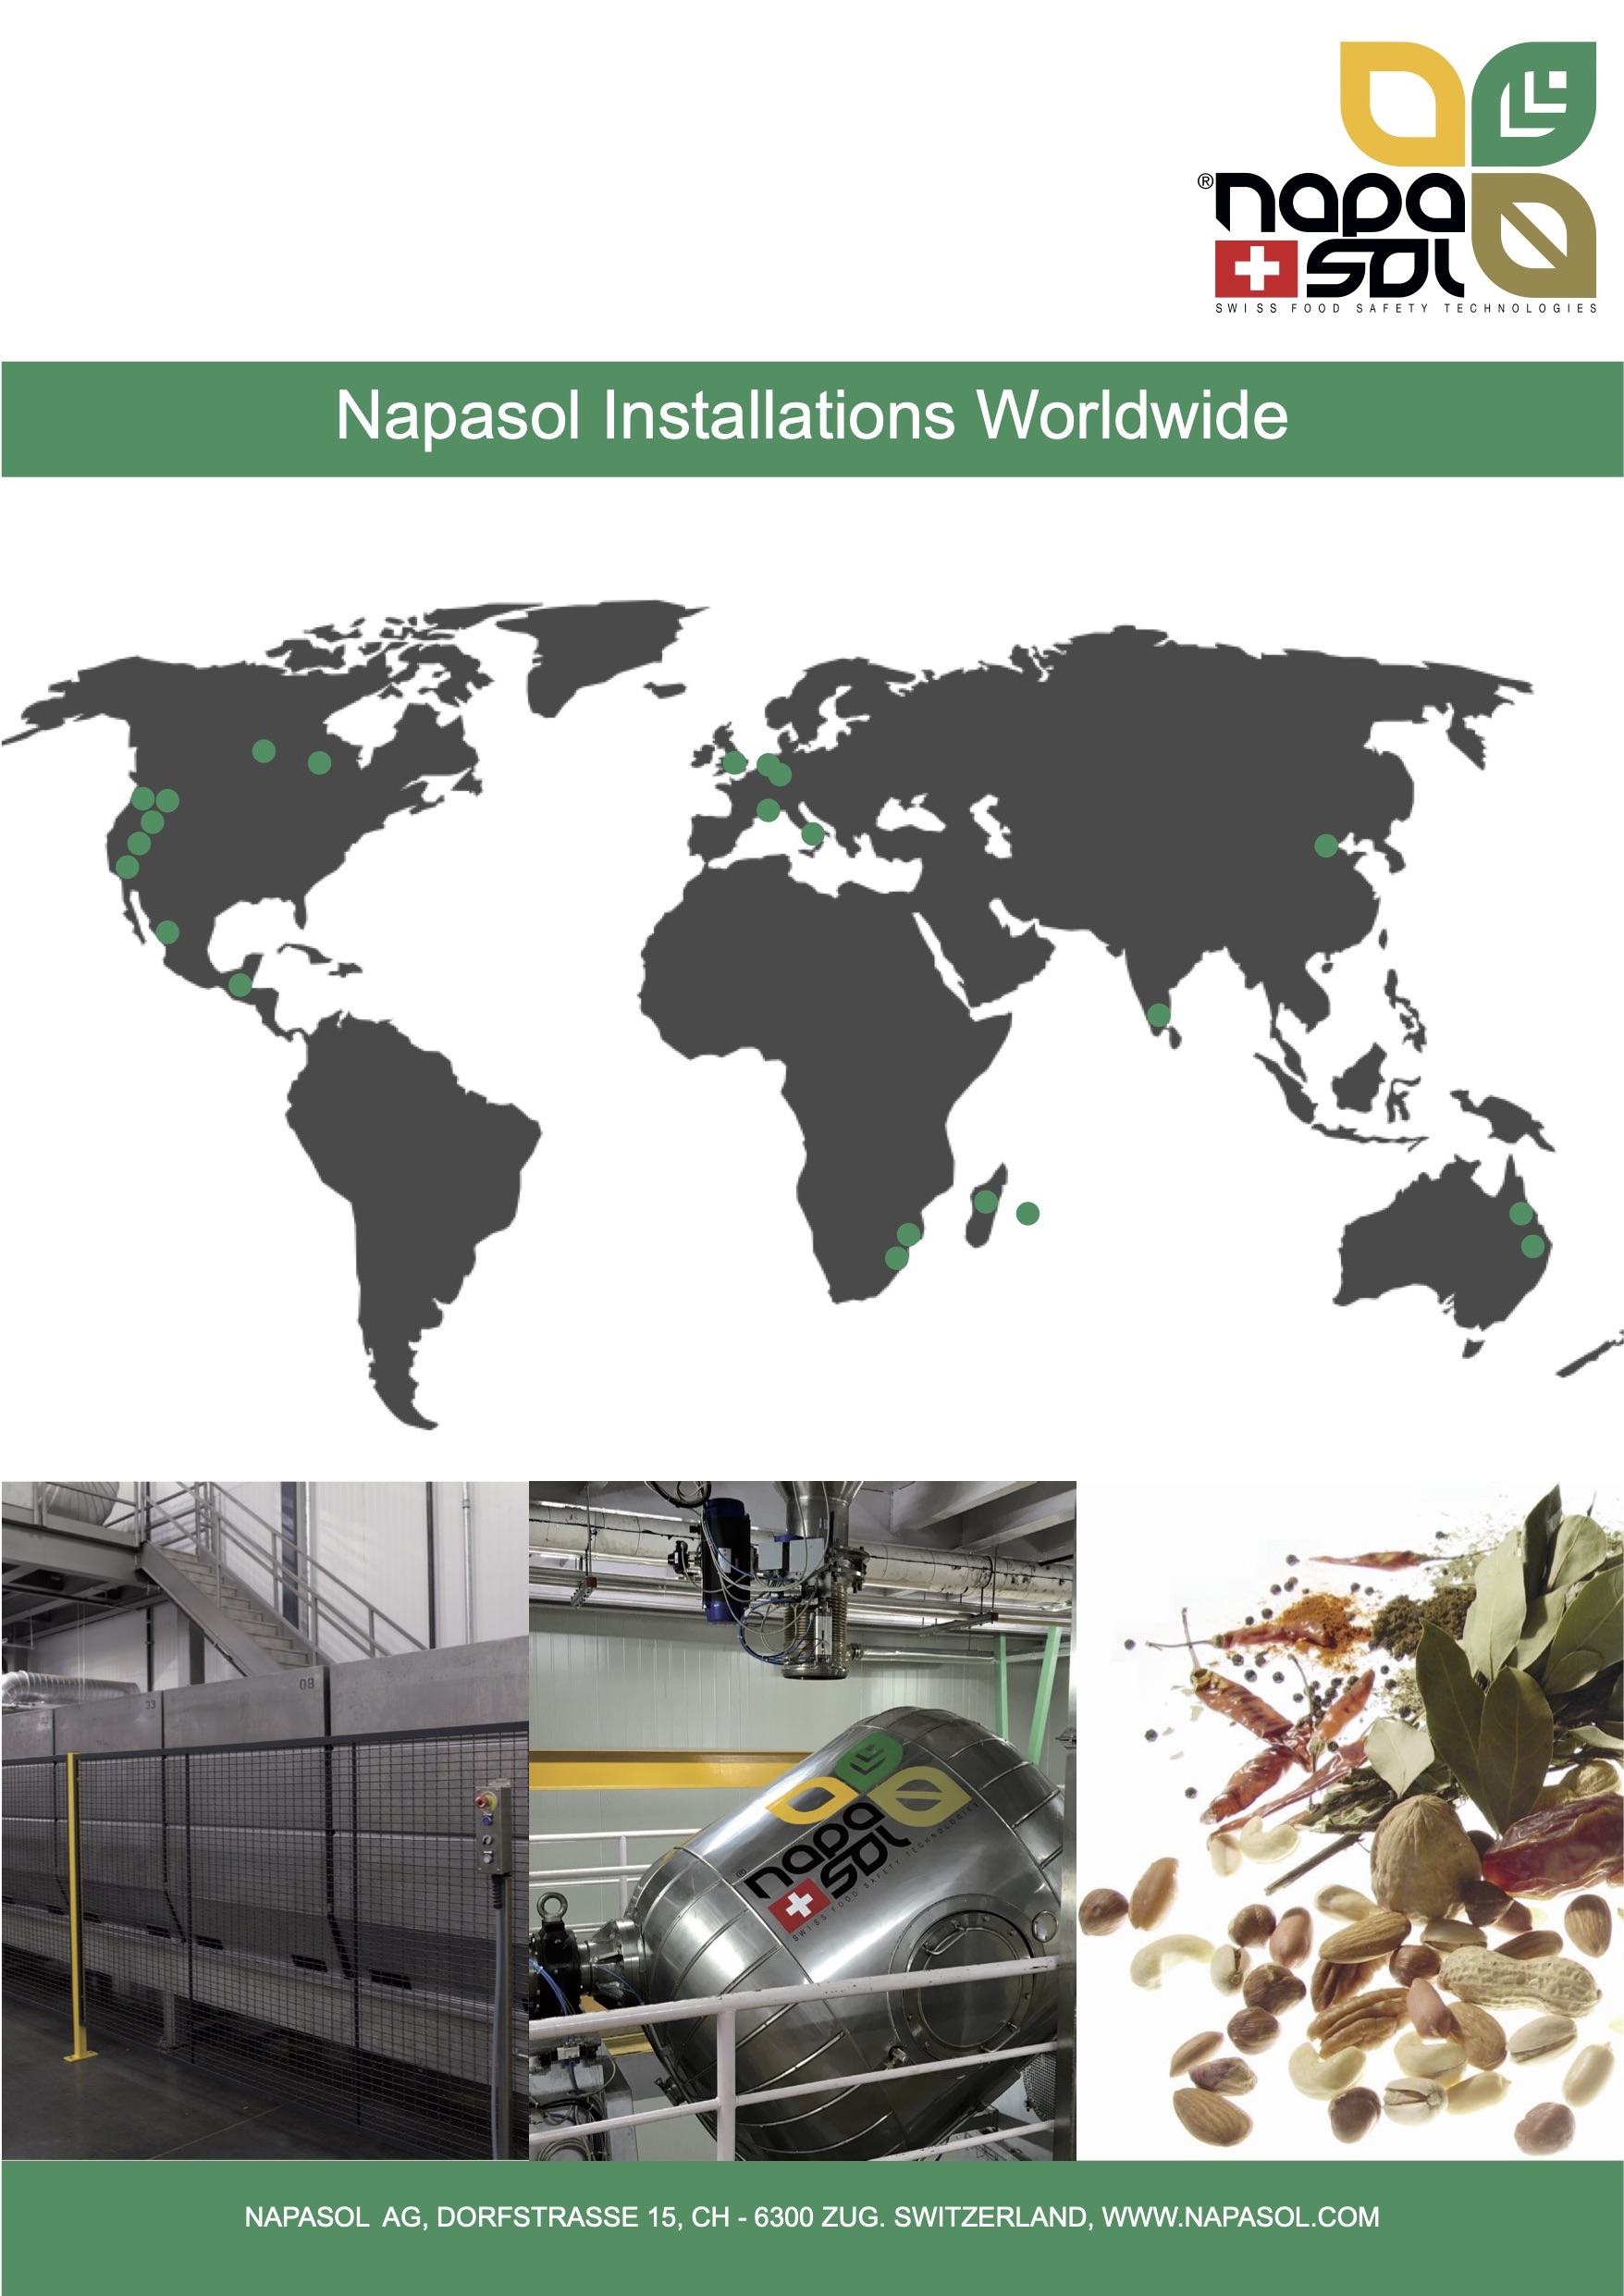 Napasol Pasteurization plants established worldwide